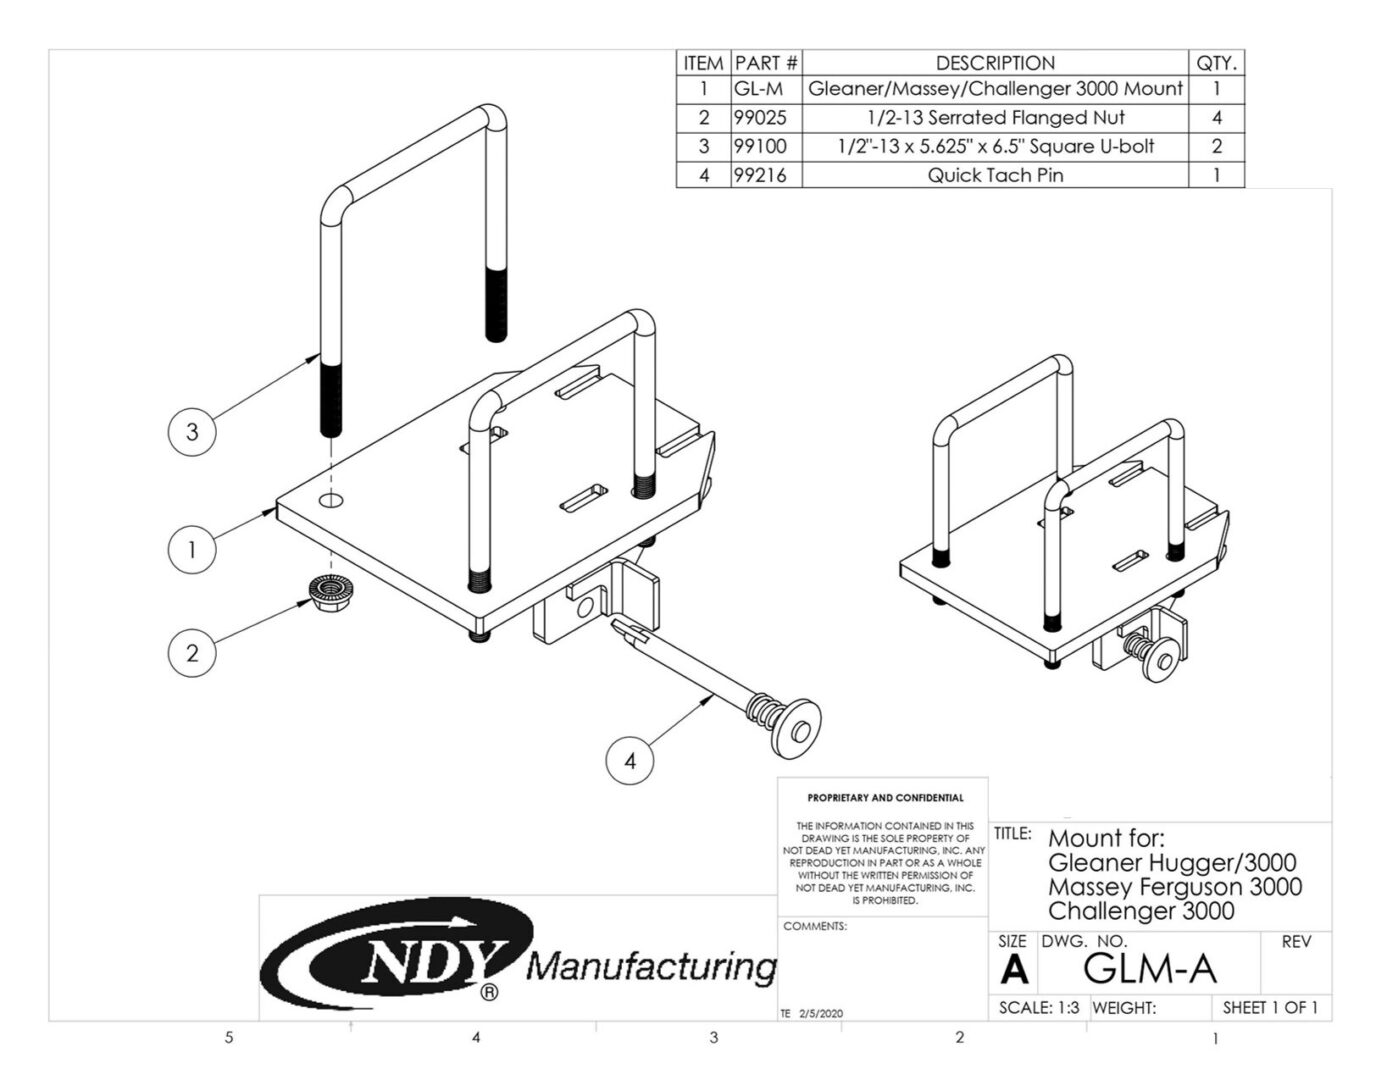 Ndy manufacturing Stalk Stomper Mount for Gleaner Hugger and 3000, Massey Ferguson 3000, and Challenger 3000 Series.